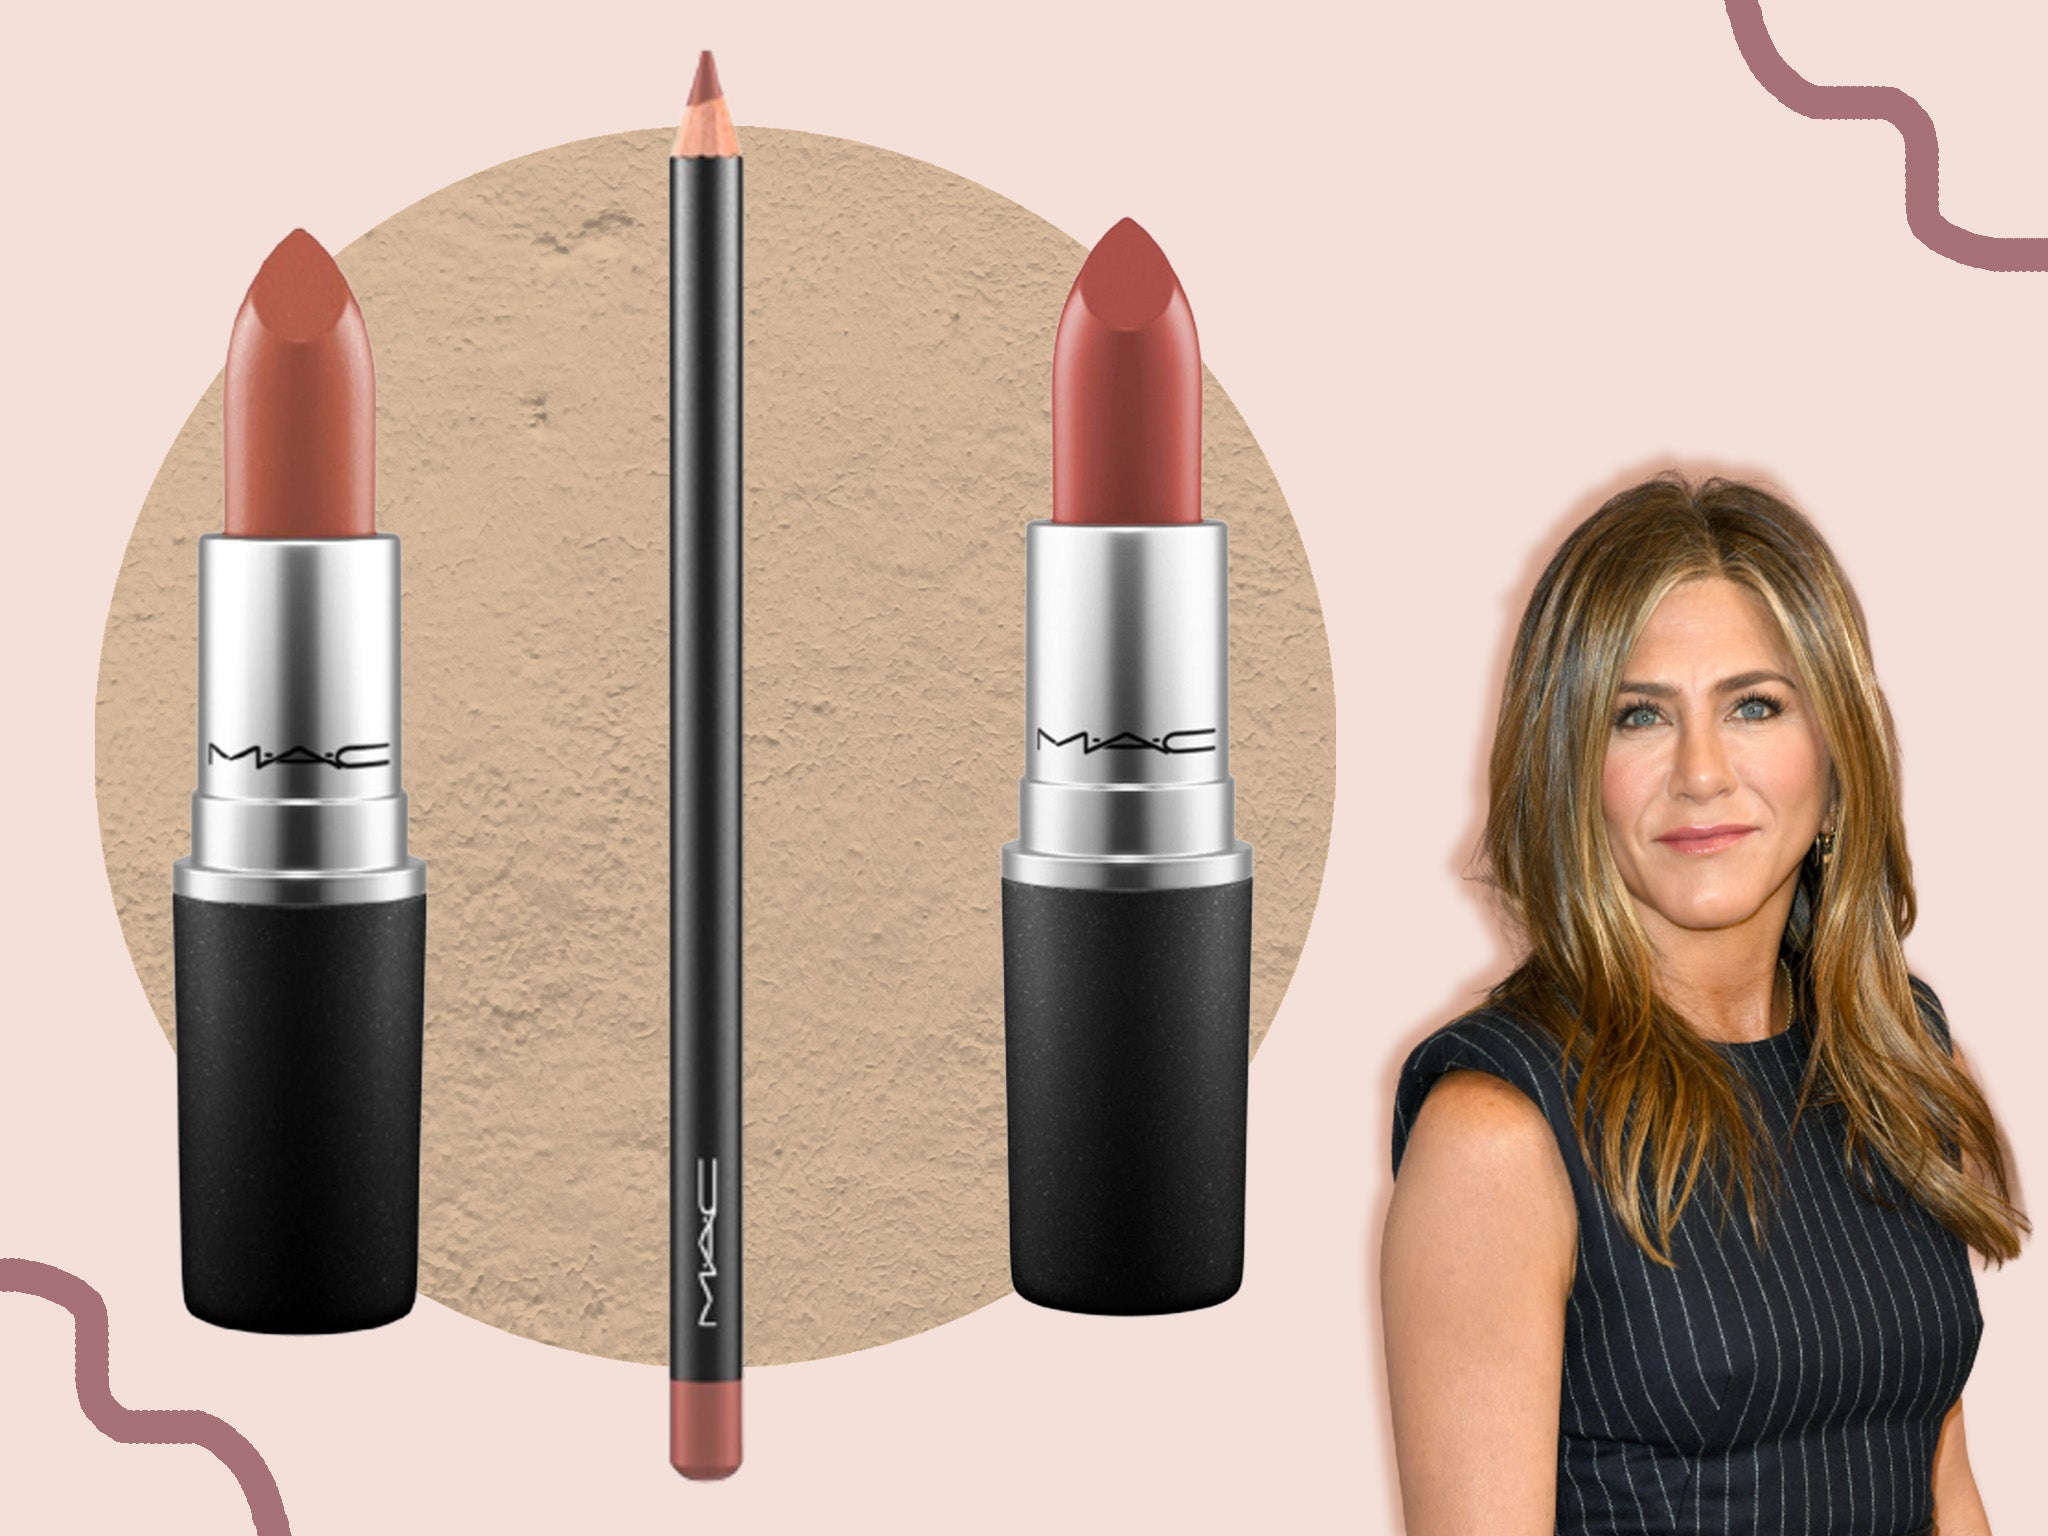 Jennifer Aniston wore these Mac lipsticks as Rachel Green in Friends